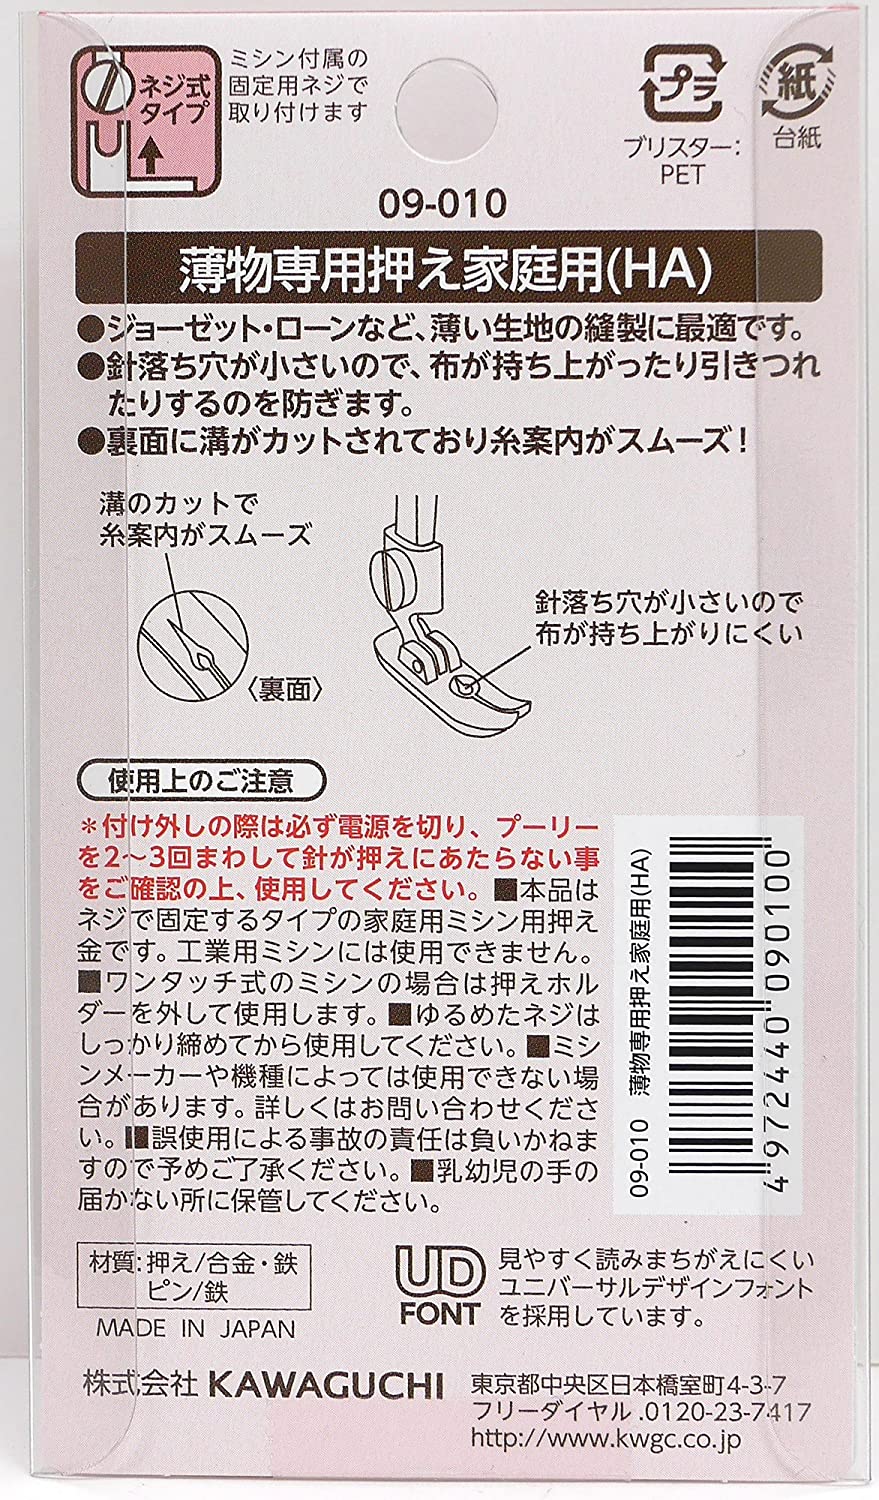 Kawaguchi household sewing machine presser foot for waterproof fabric/leather 家用衣車 薄布專用靴 壓腳